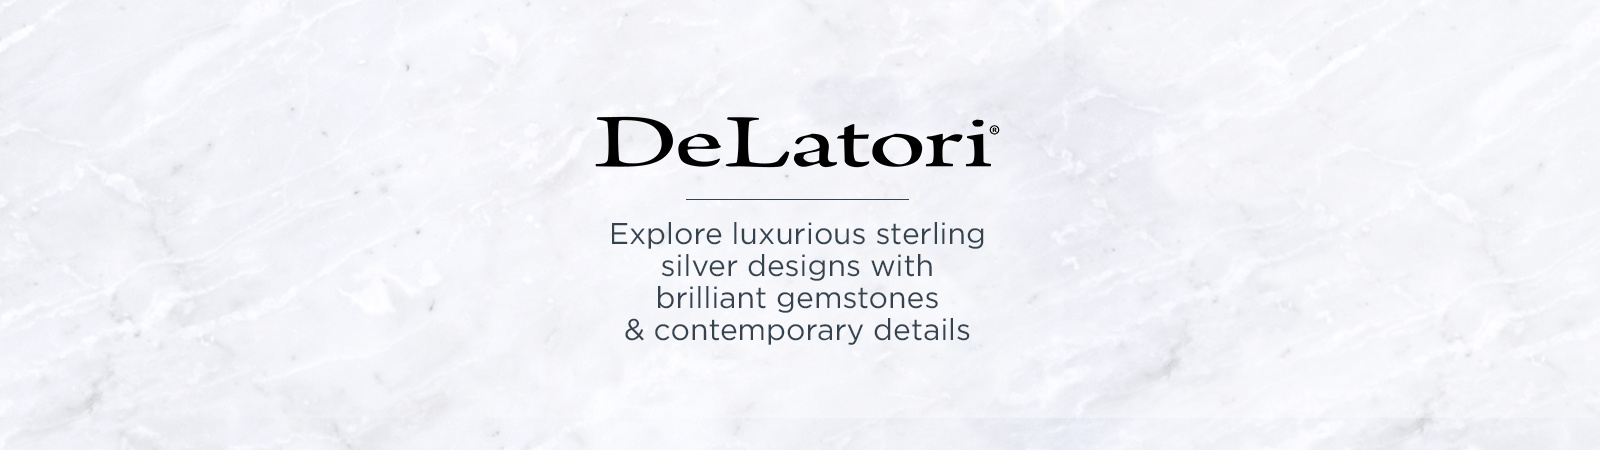 DeLatori — Explore Luxurious sterling silver designs with brilliant gemstones & contemporary details